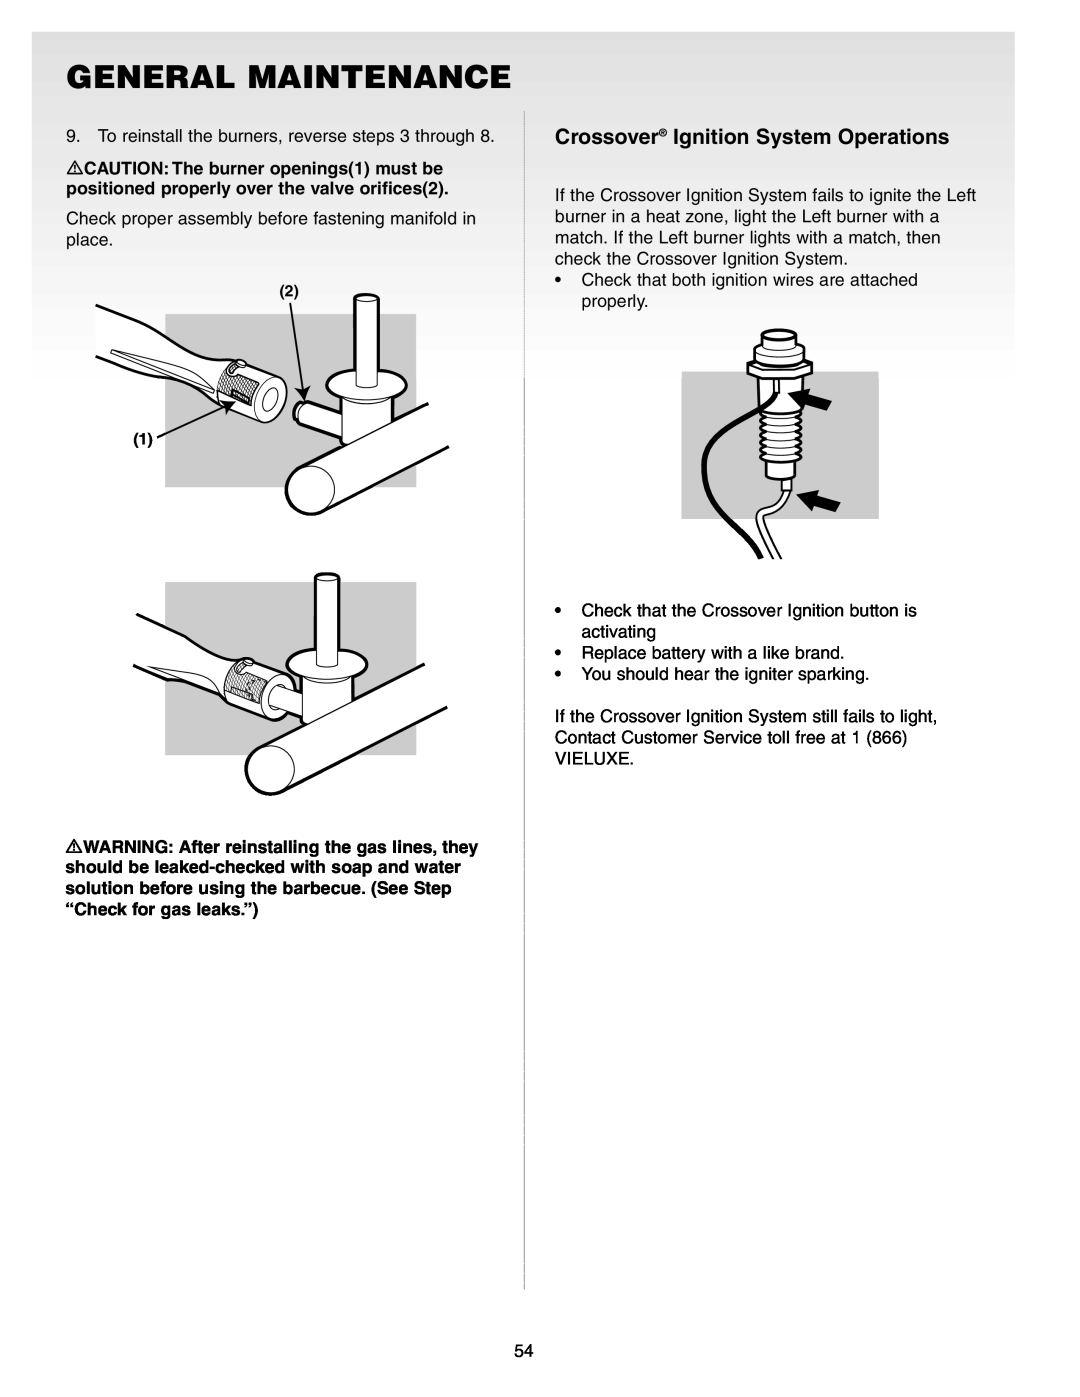 Weber Gas Burner manual General Maintenance, Crossover Ignition System Operations 